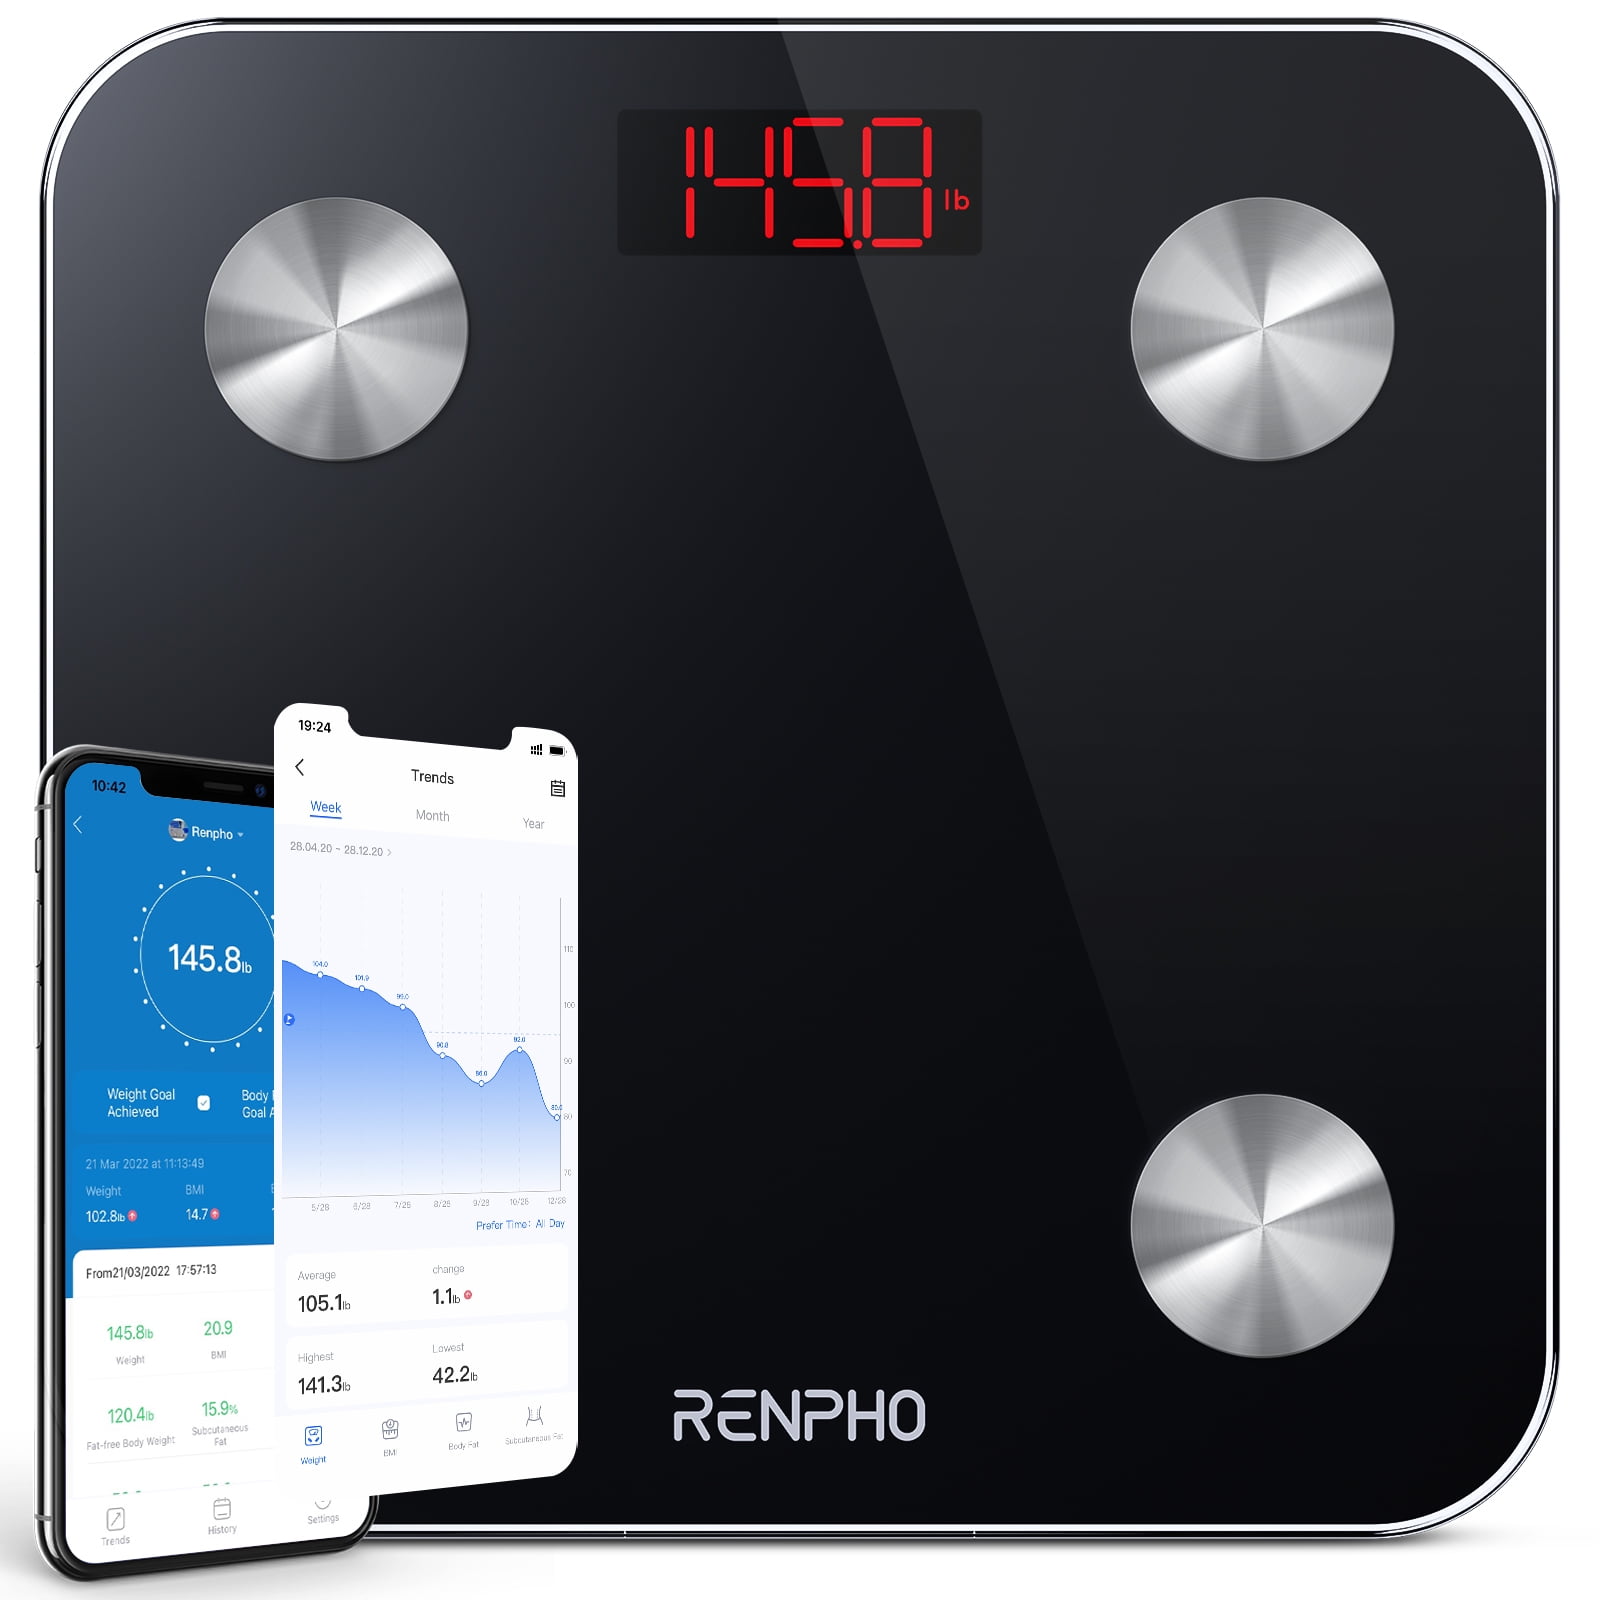 Renpho Smart Body Fat Scale review